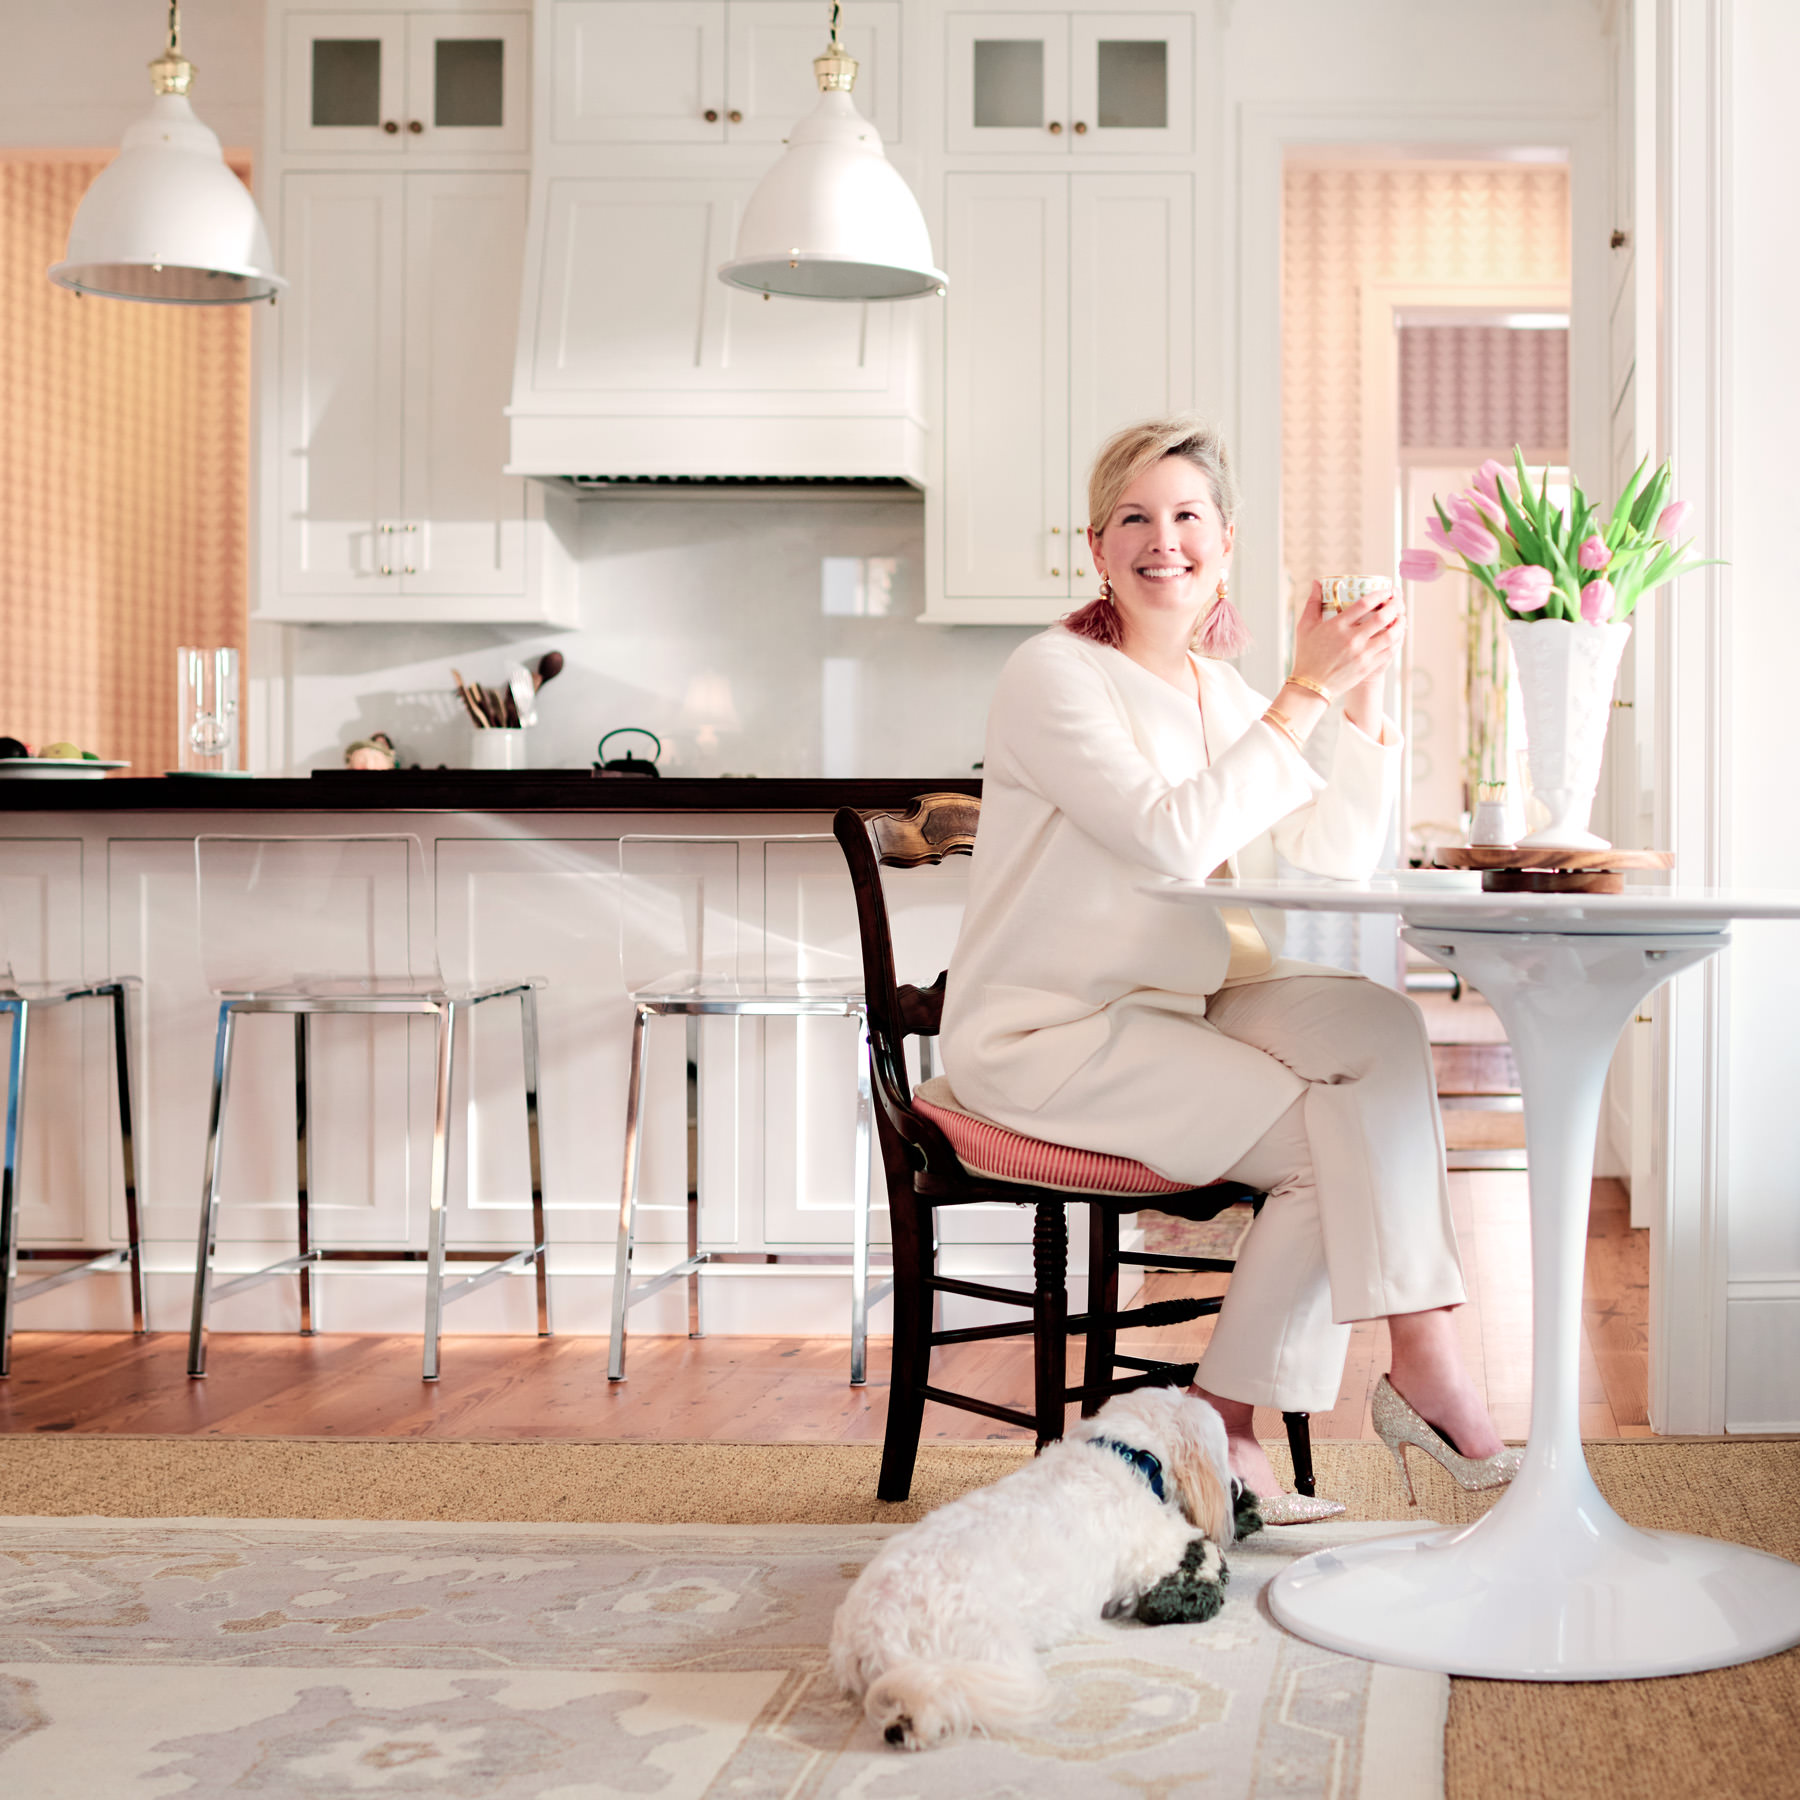 eli-turner-photography-woman-kitchen-interior-portrait-lauren1